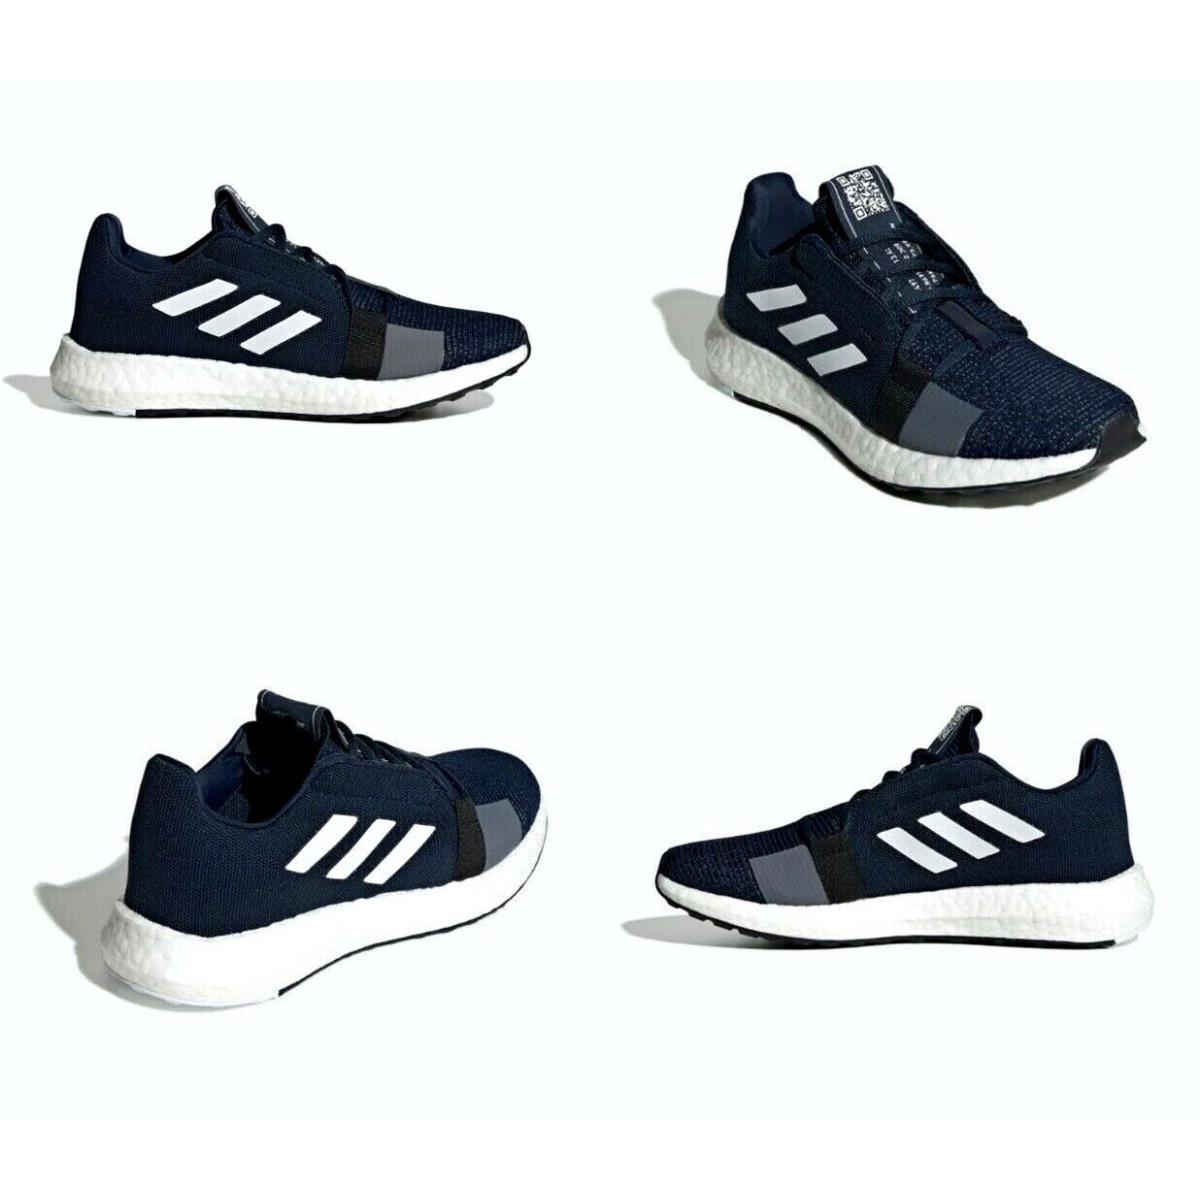 Adidas Senseboost GO Boost Shoes Blue White Black Womens Size 10 US EF1577